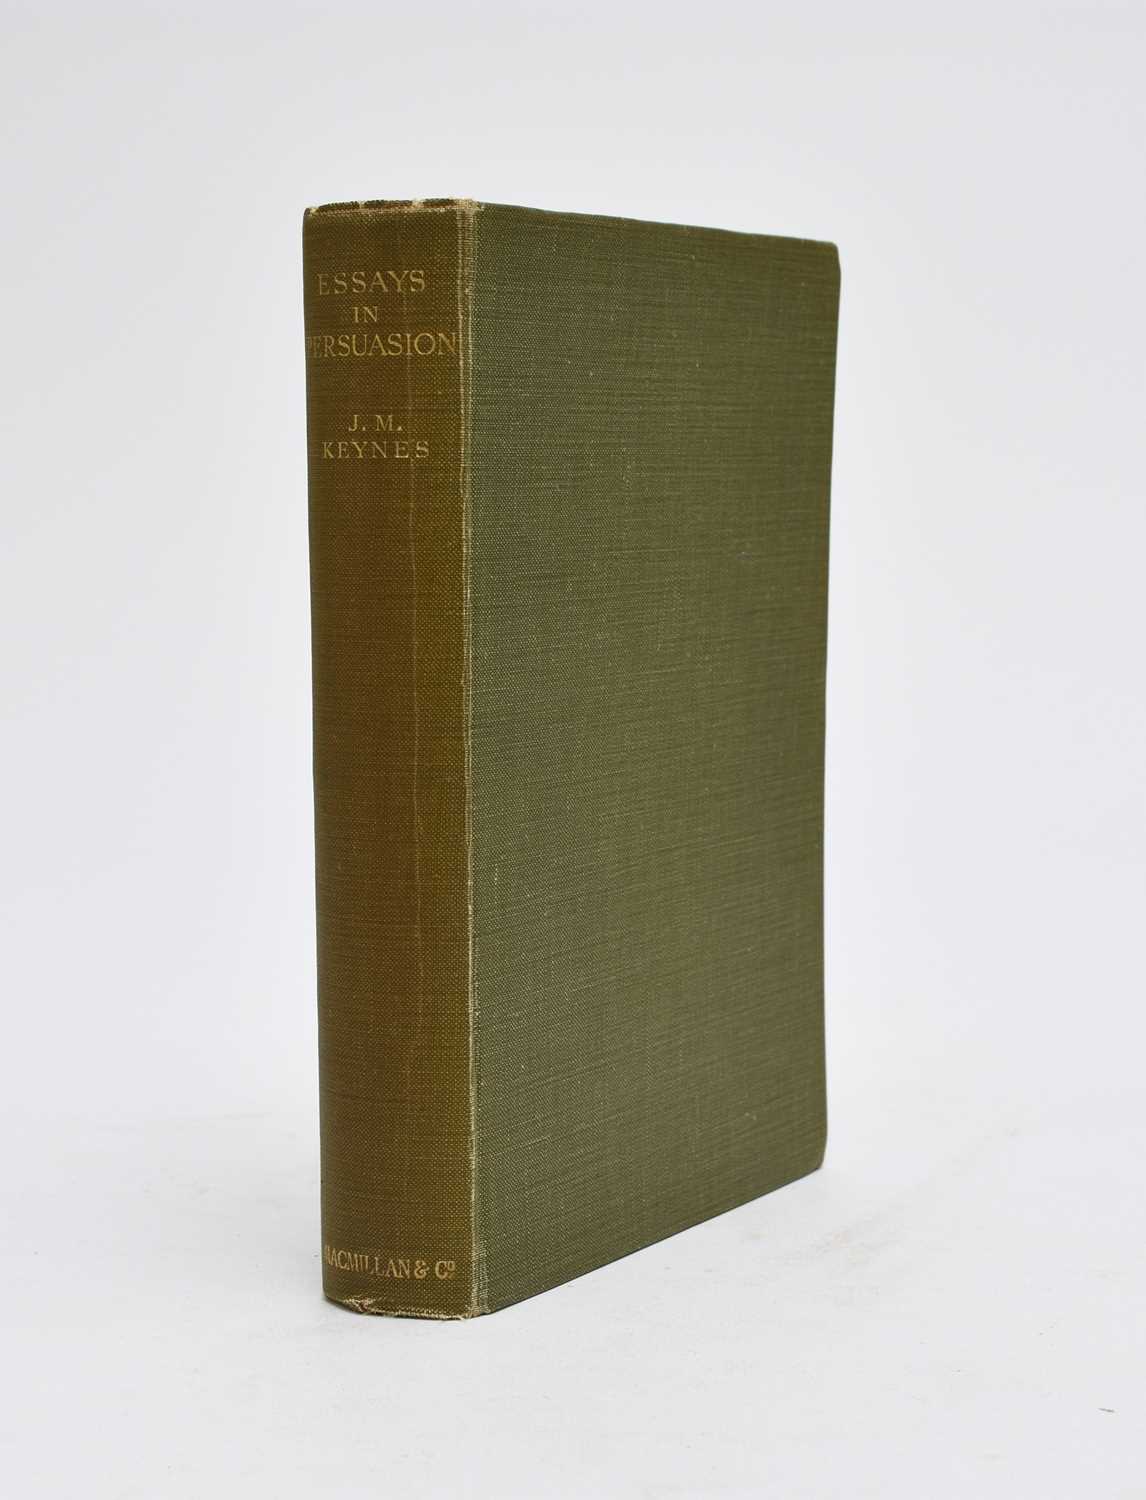 KEYNES, John Maynard, Essays in Persuasion, 1st edition 1931. Bookplates on pastedowns.